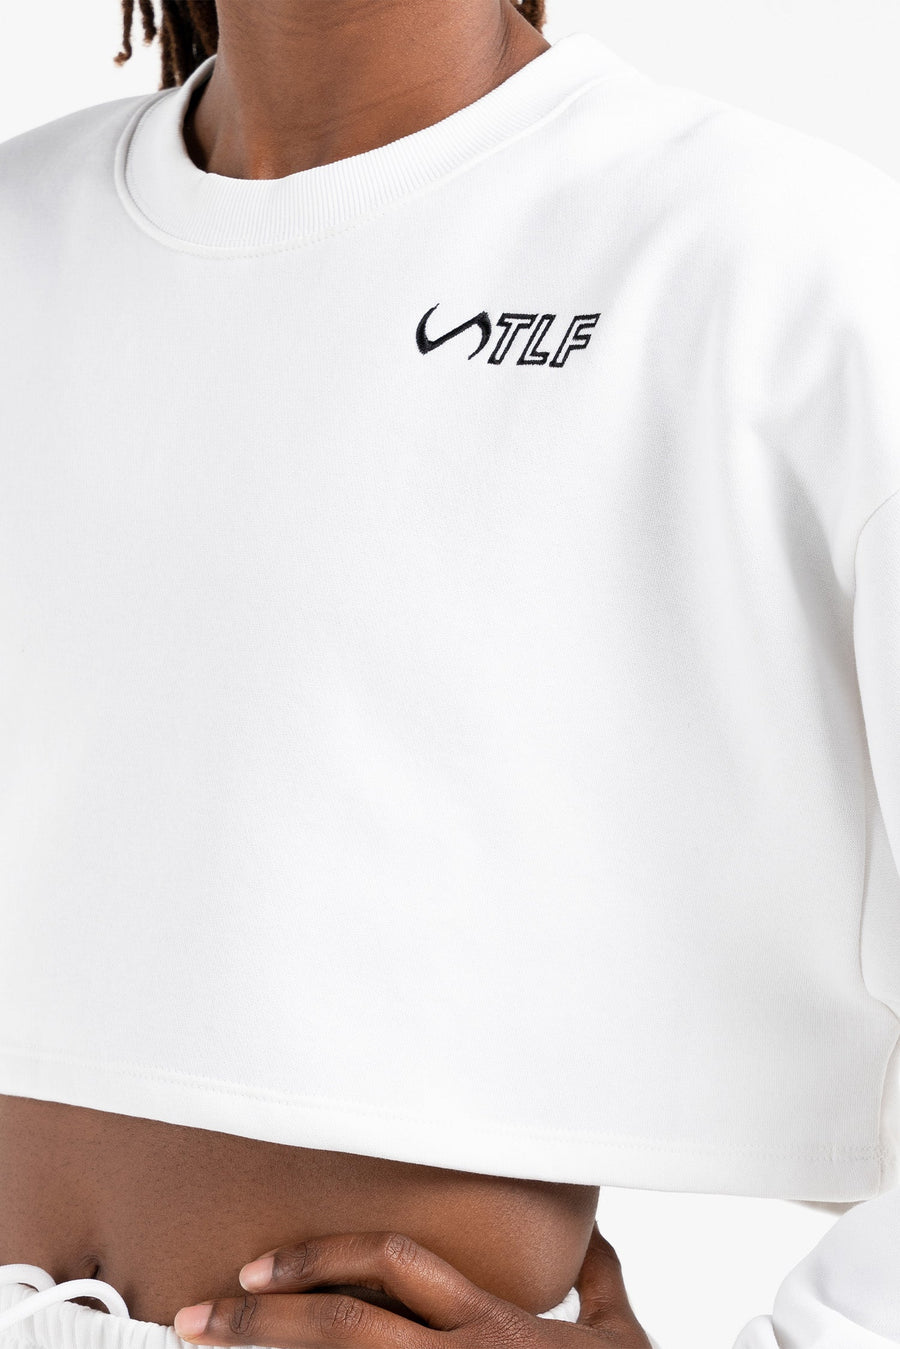 TLF Chill Fleece Oversized Crop Sweatshirt - Oversized White Sweatshirt - White - 4